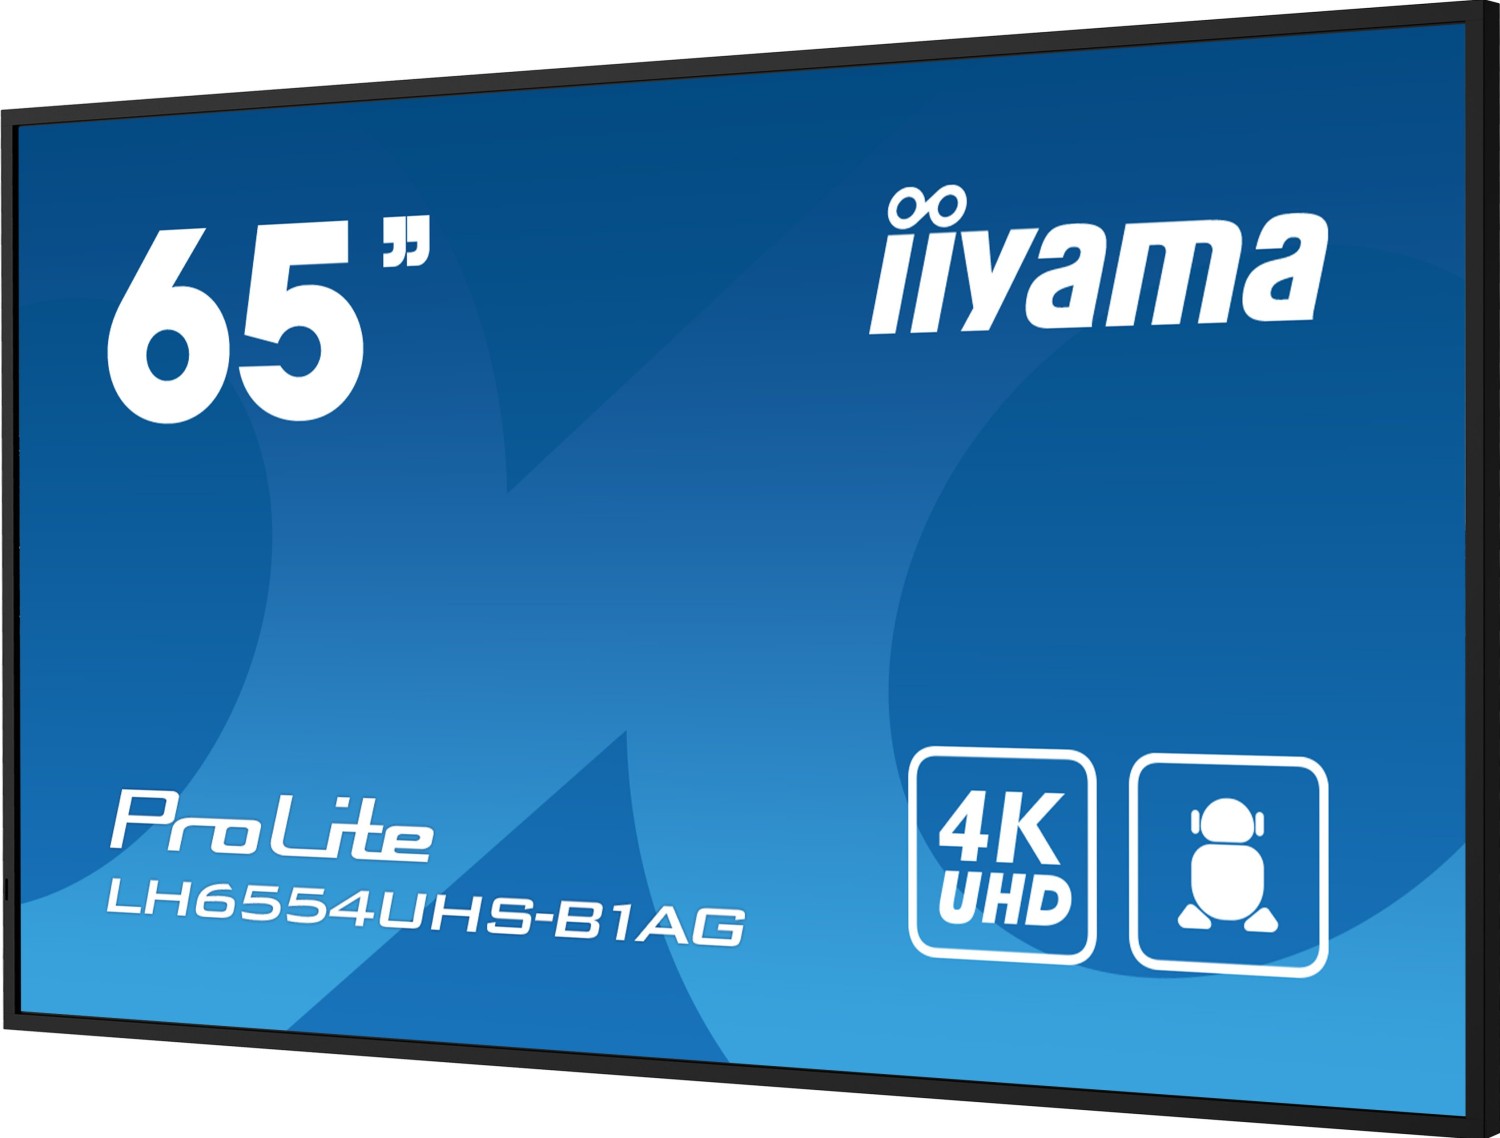 Iiyama ProLite LH6554UHS-B1AG, 164cm (64.6"), schwarz TFT Monitor, 16:9, 164cm (64.6"), Auflösung: 3840x2160 Pixel, VESA Mount, 8ms, Helligkeit: 500cd, Blickwinkel: 178/178°(H/V), Kontrast: 1200:1, Anschluß: USB, WLAN, Audio, DVI, VGA, Display-Port, HDMI, inkl.: Kabel (HDMI), Netzteil, Netzkabel (EU, UK), Farbe: schwarz [Energieklasse G] (LH6554UHS-B1AG)